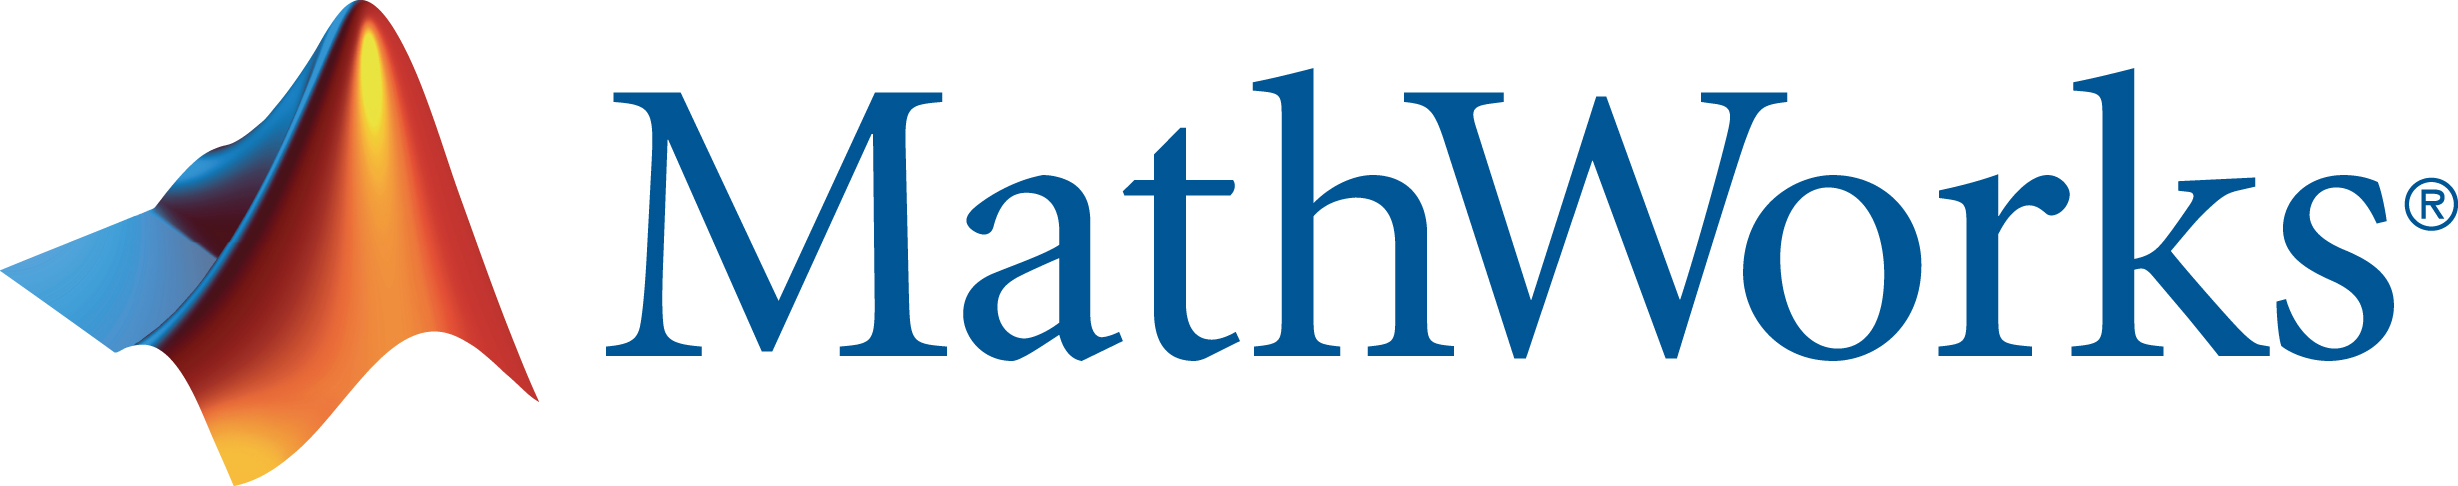 MathWorks logo.png